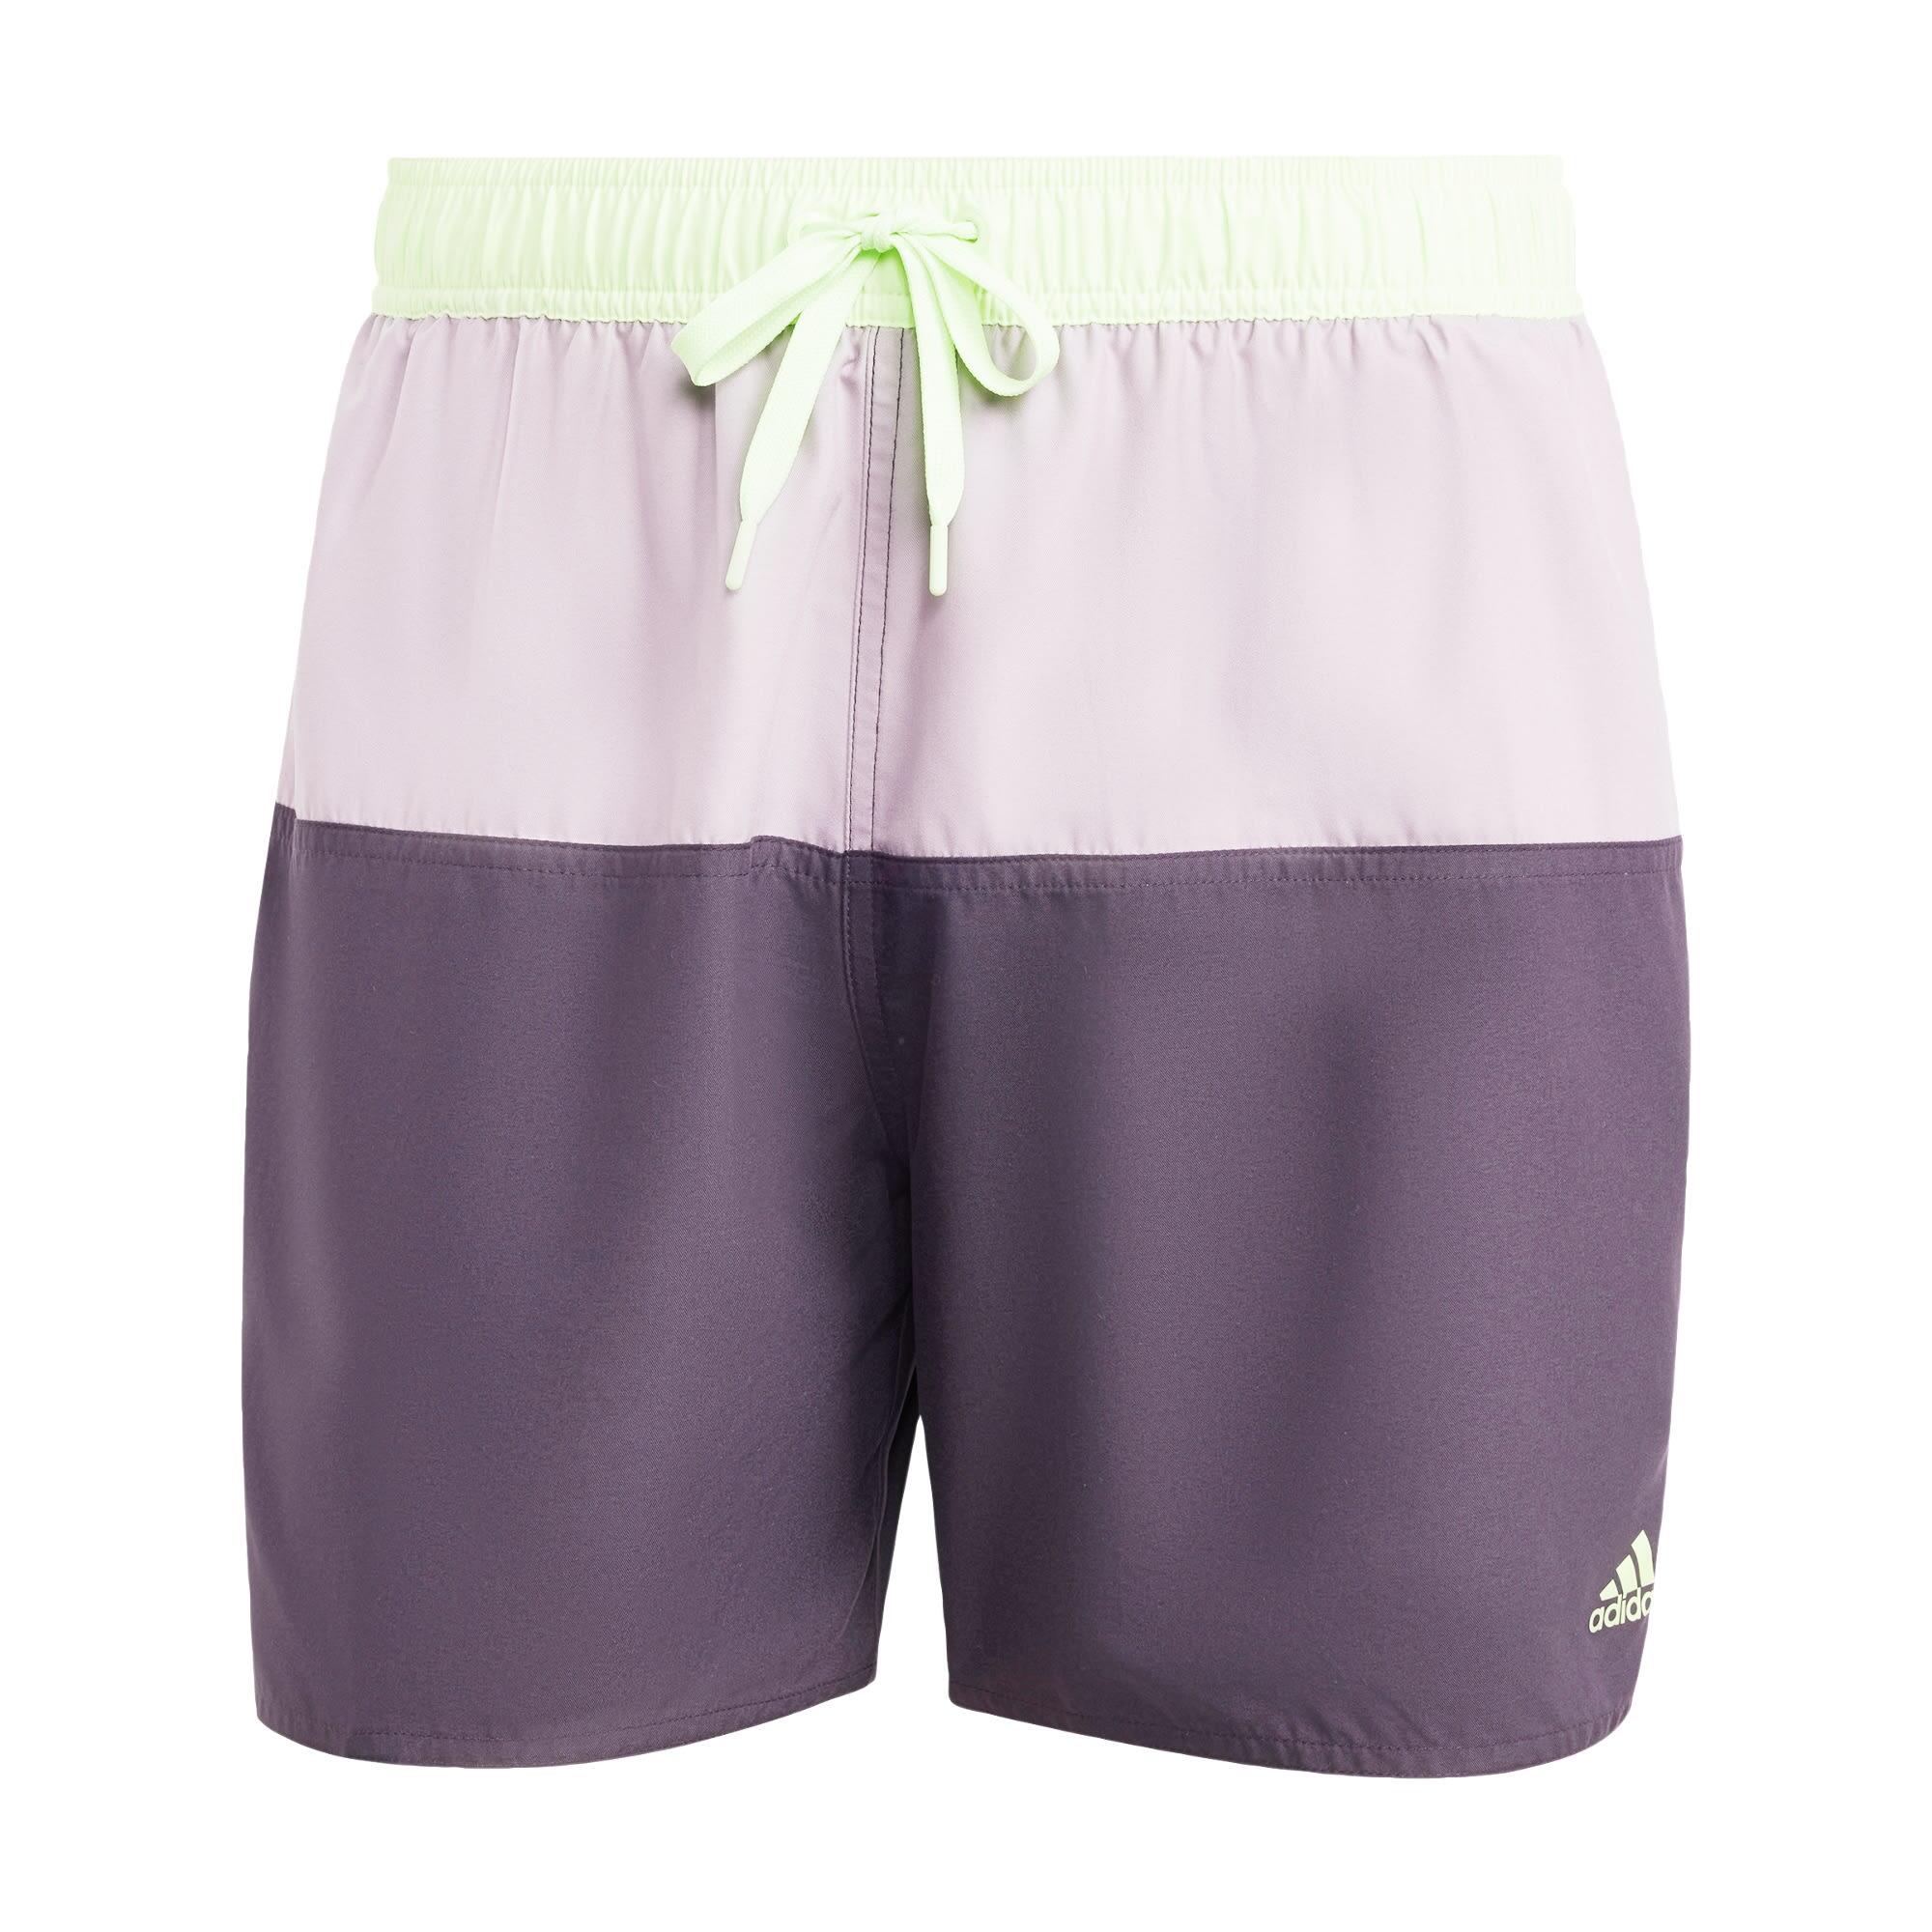 Colorblock CLX Swim Shorts Short Length 2/5